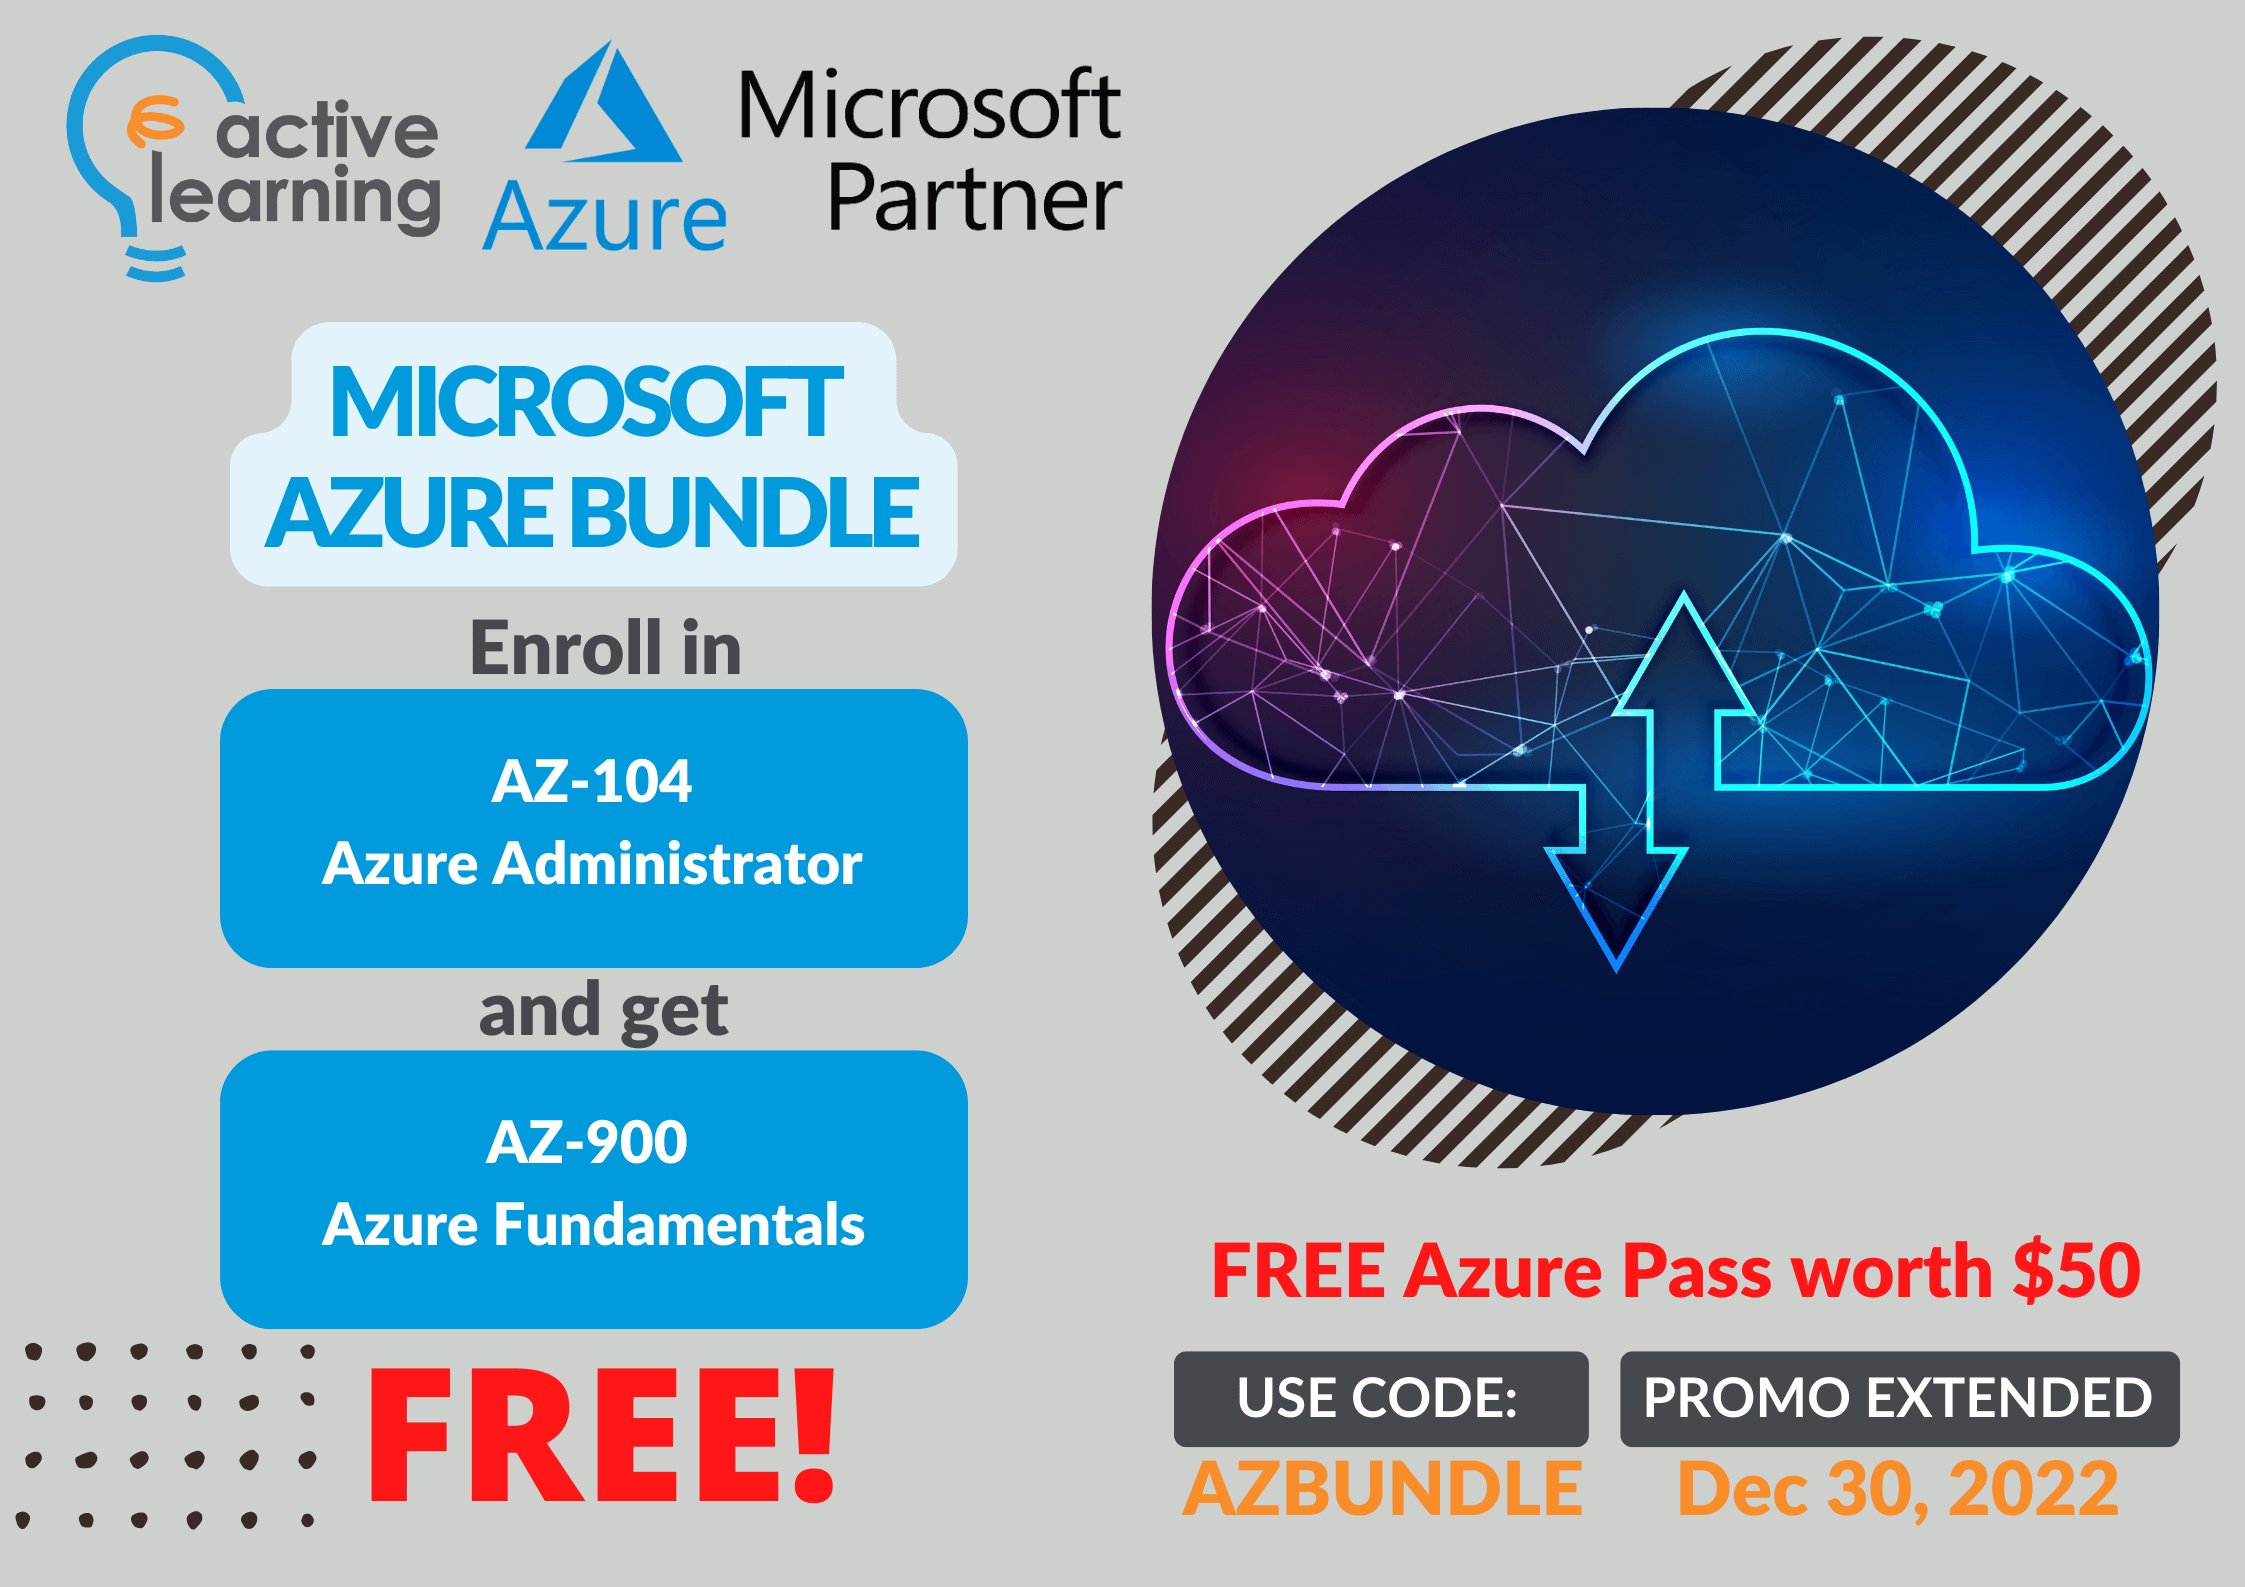 Microsoft Azure Bundle Promo